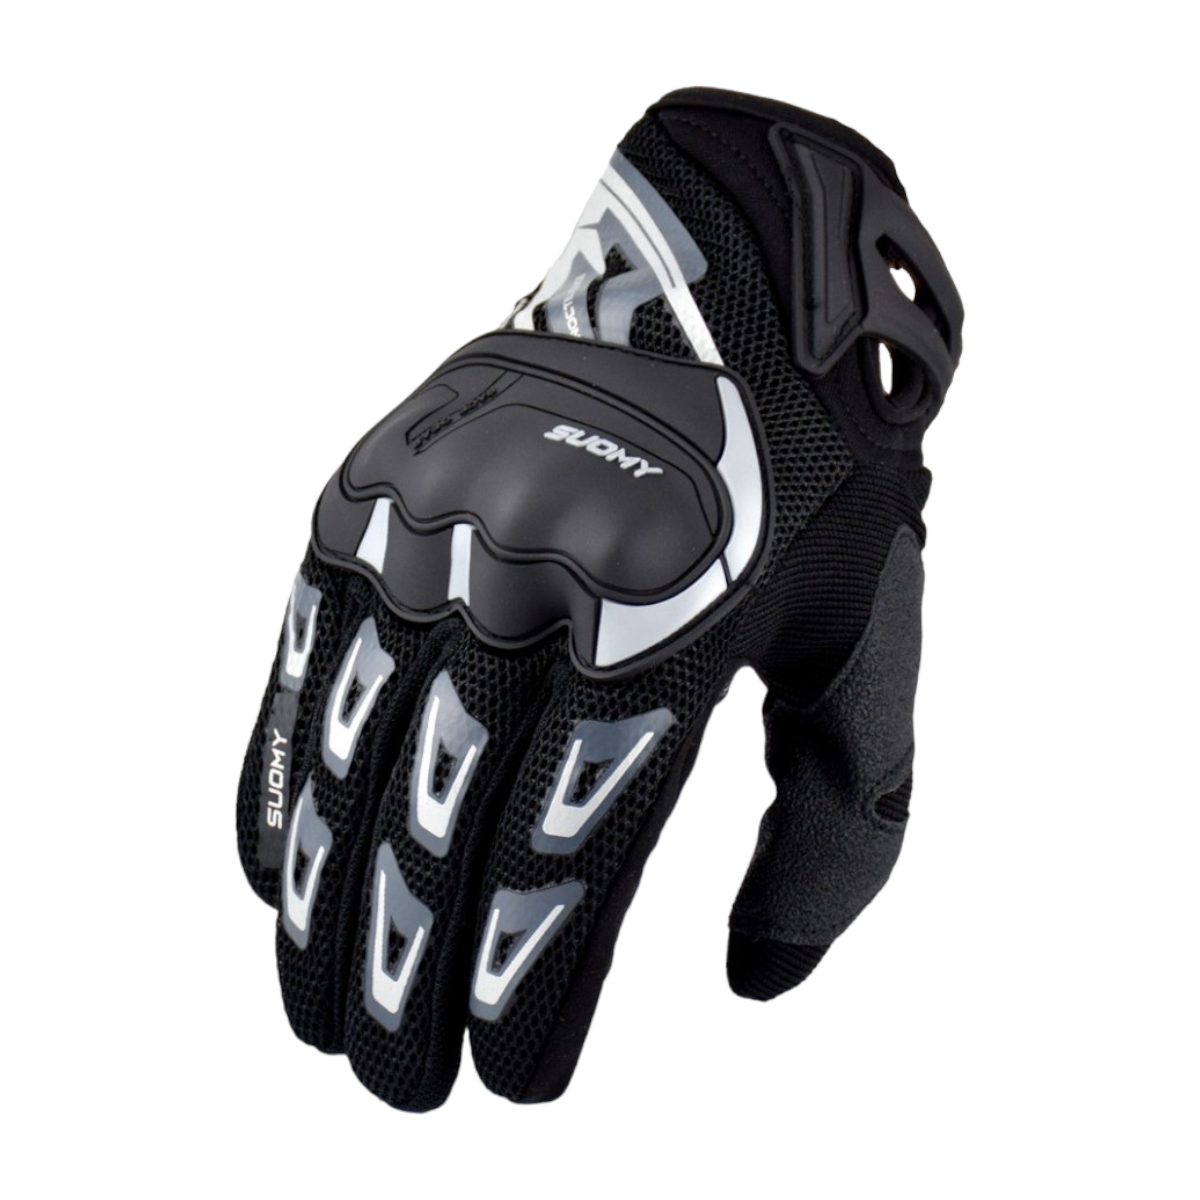 Мотоперчатки перчатки текстильные Suomy SU-11 для мотоциклиста на мотоцикл скутер мопед квадроцикл, черно-серые, L